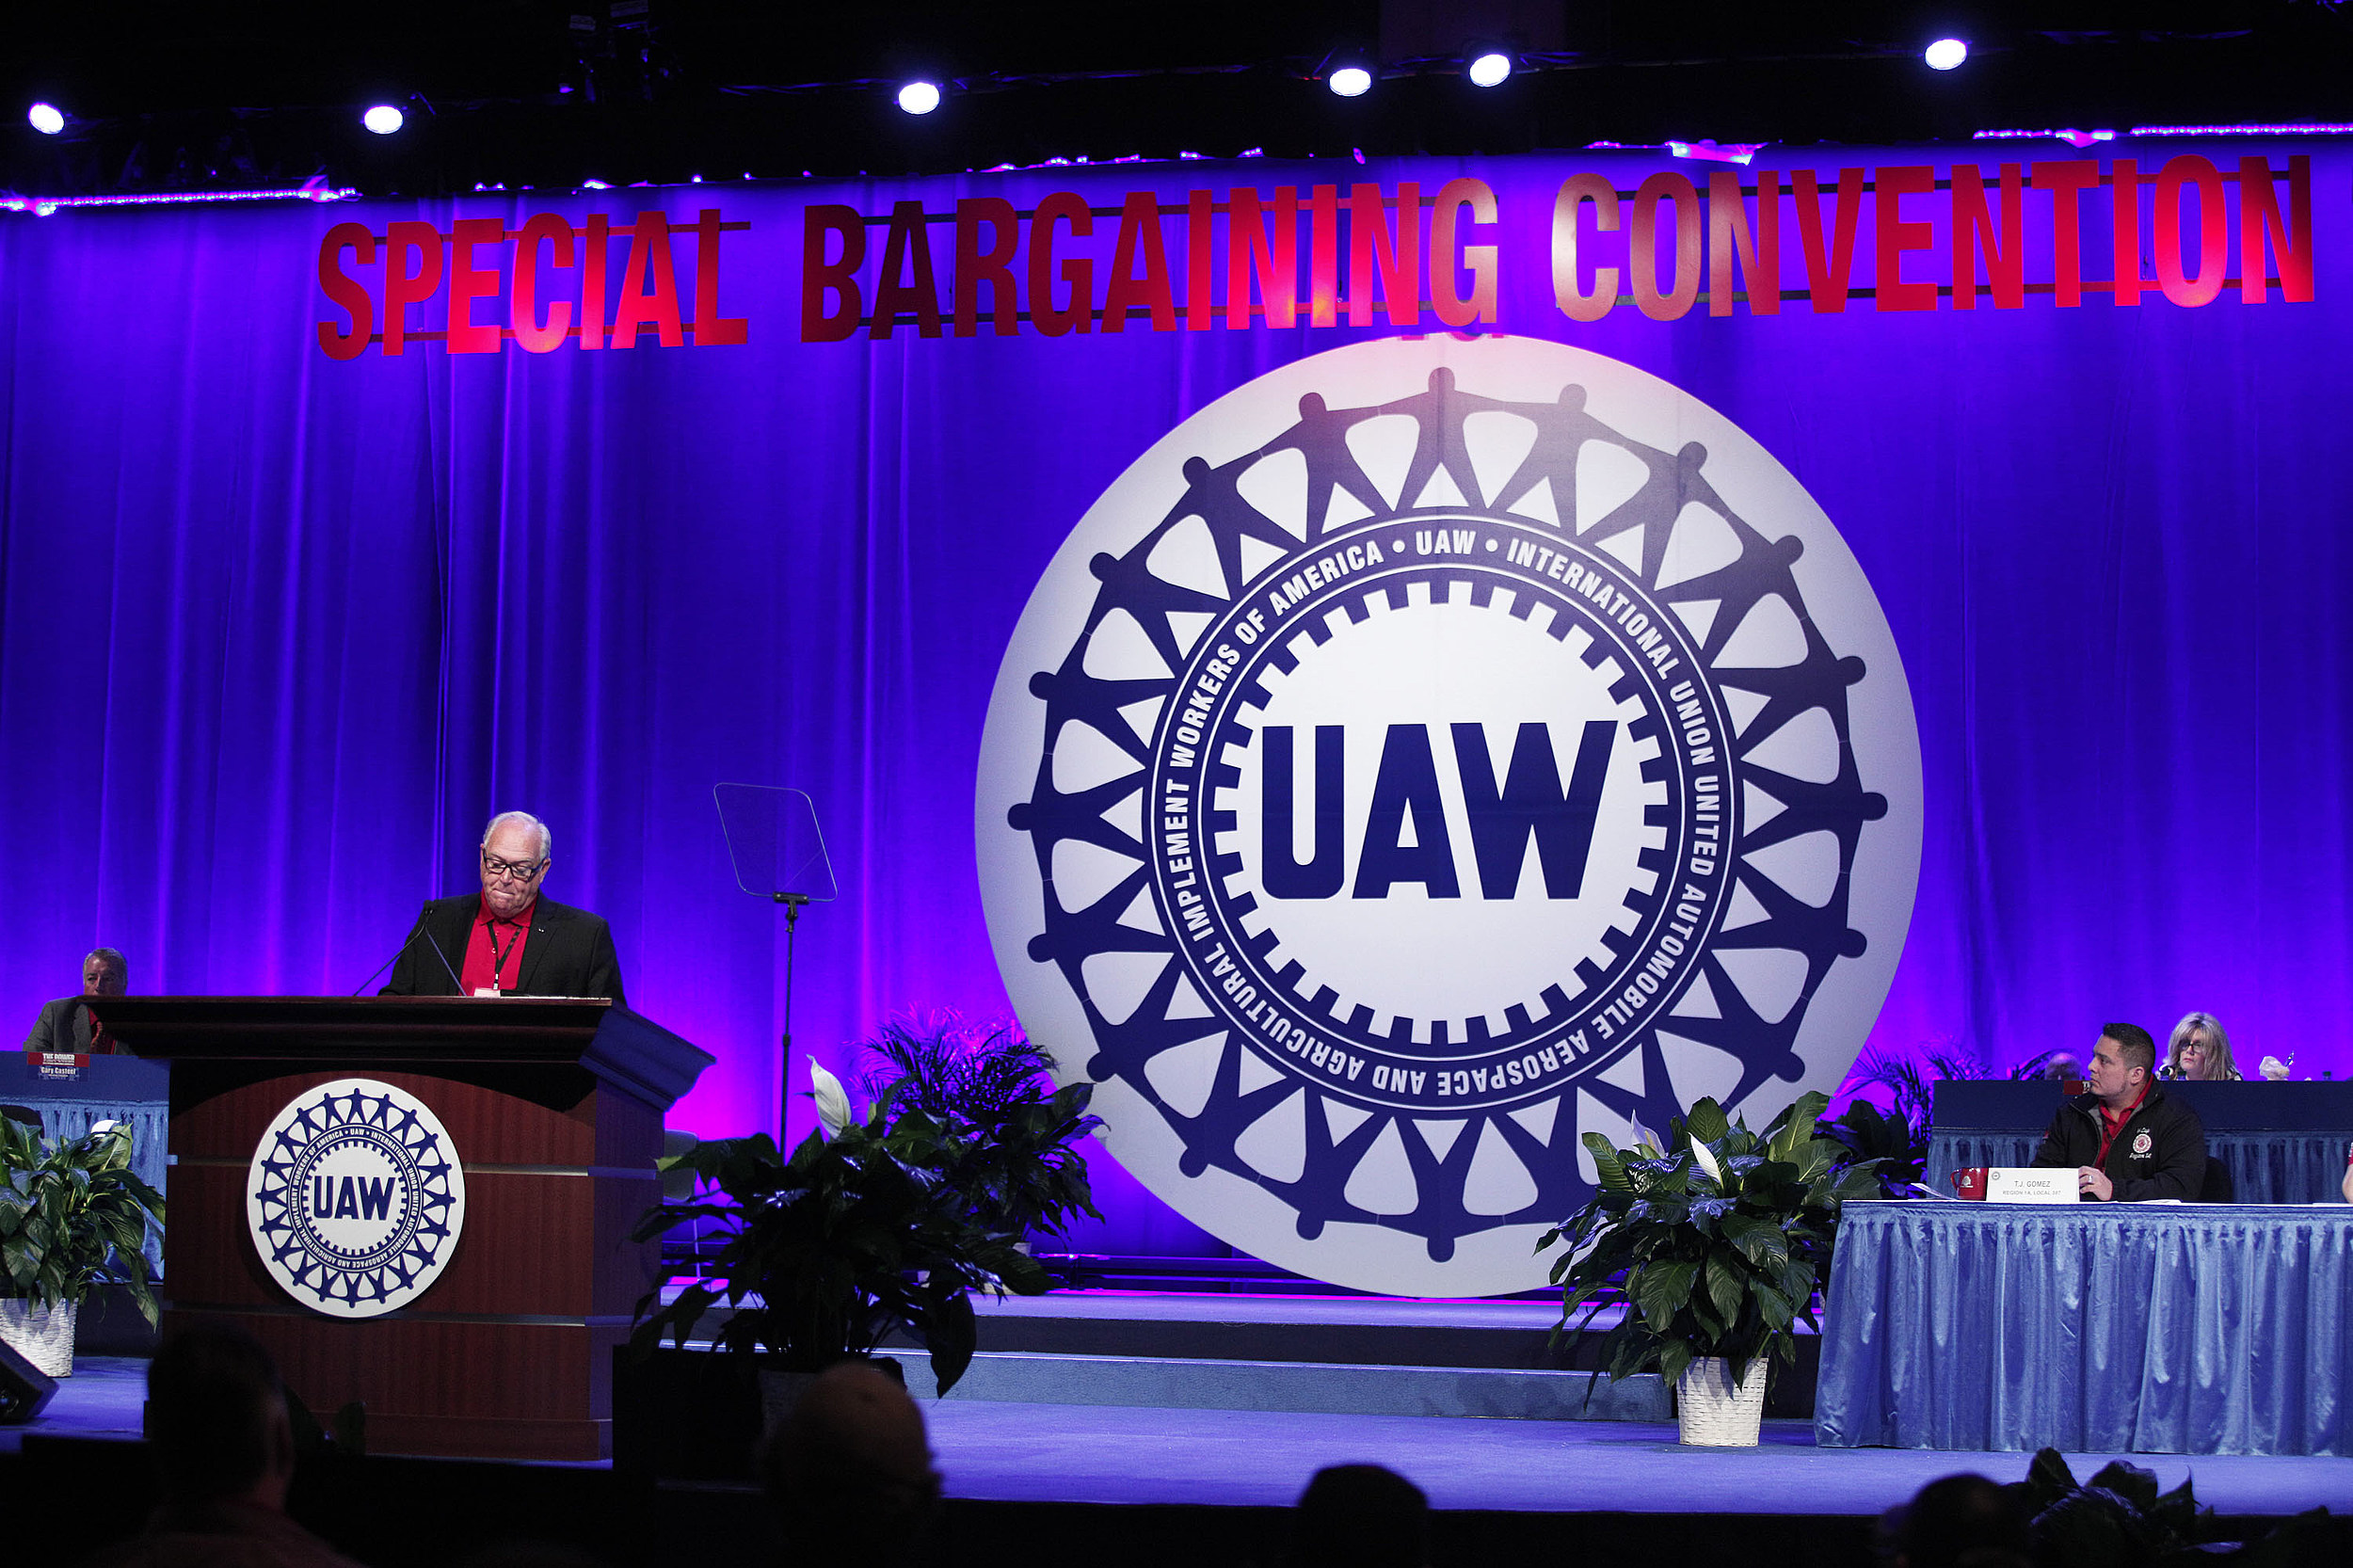 UAW International Union